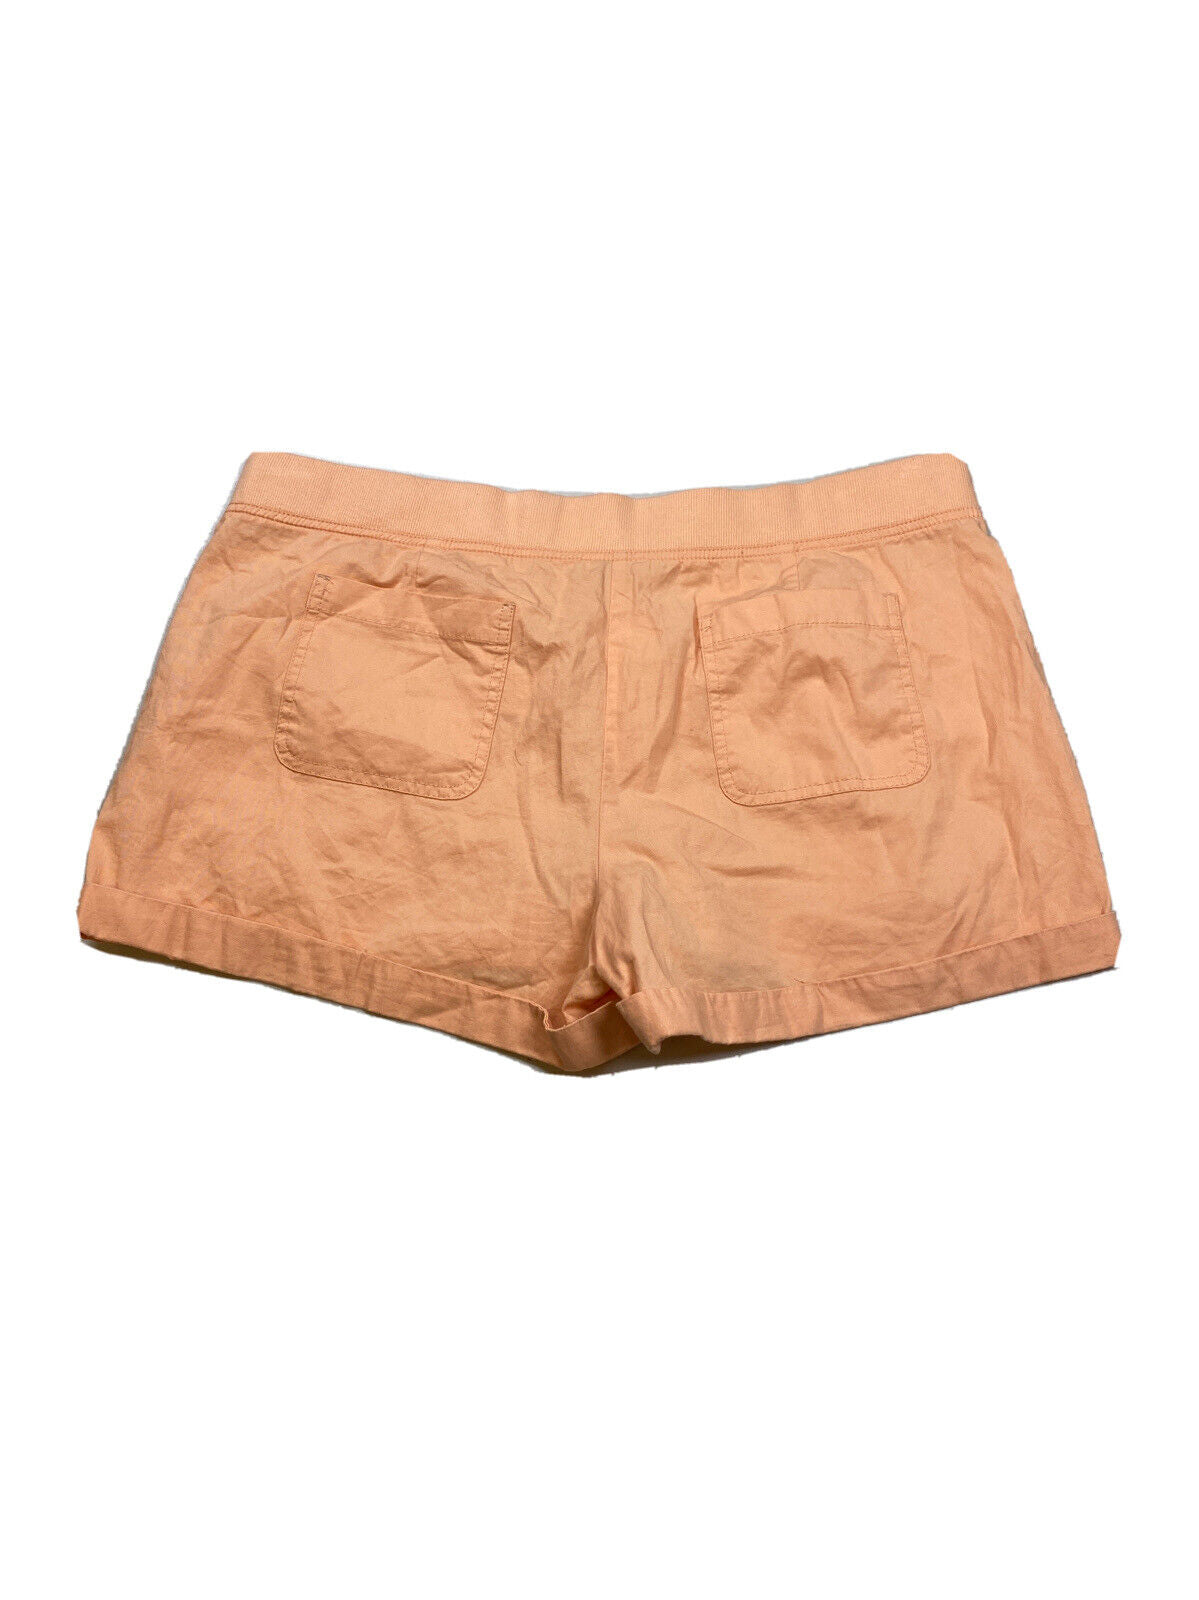 NEW LOFT Women's Orange Stretch Chino Shorts - 14